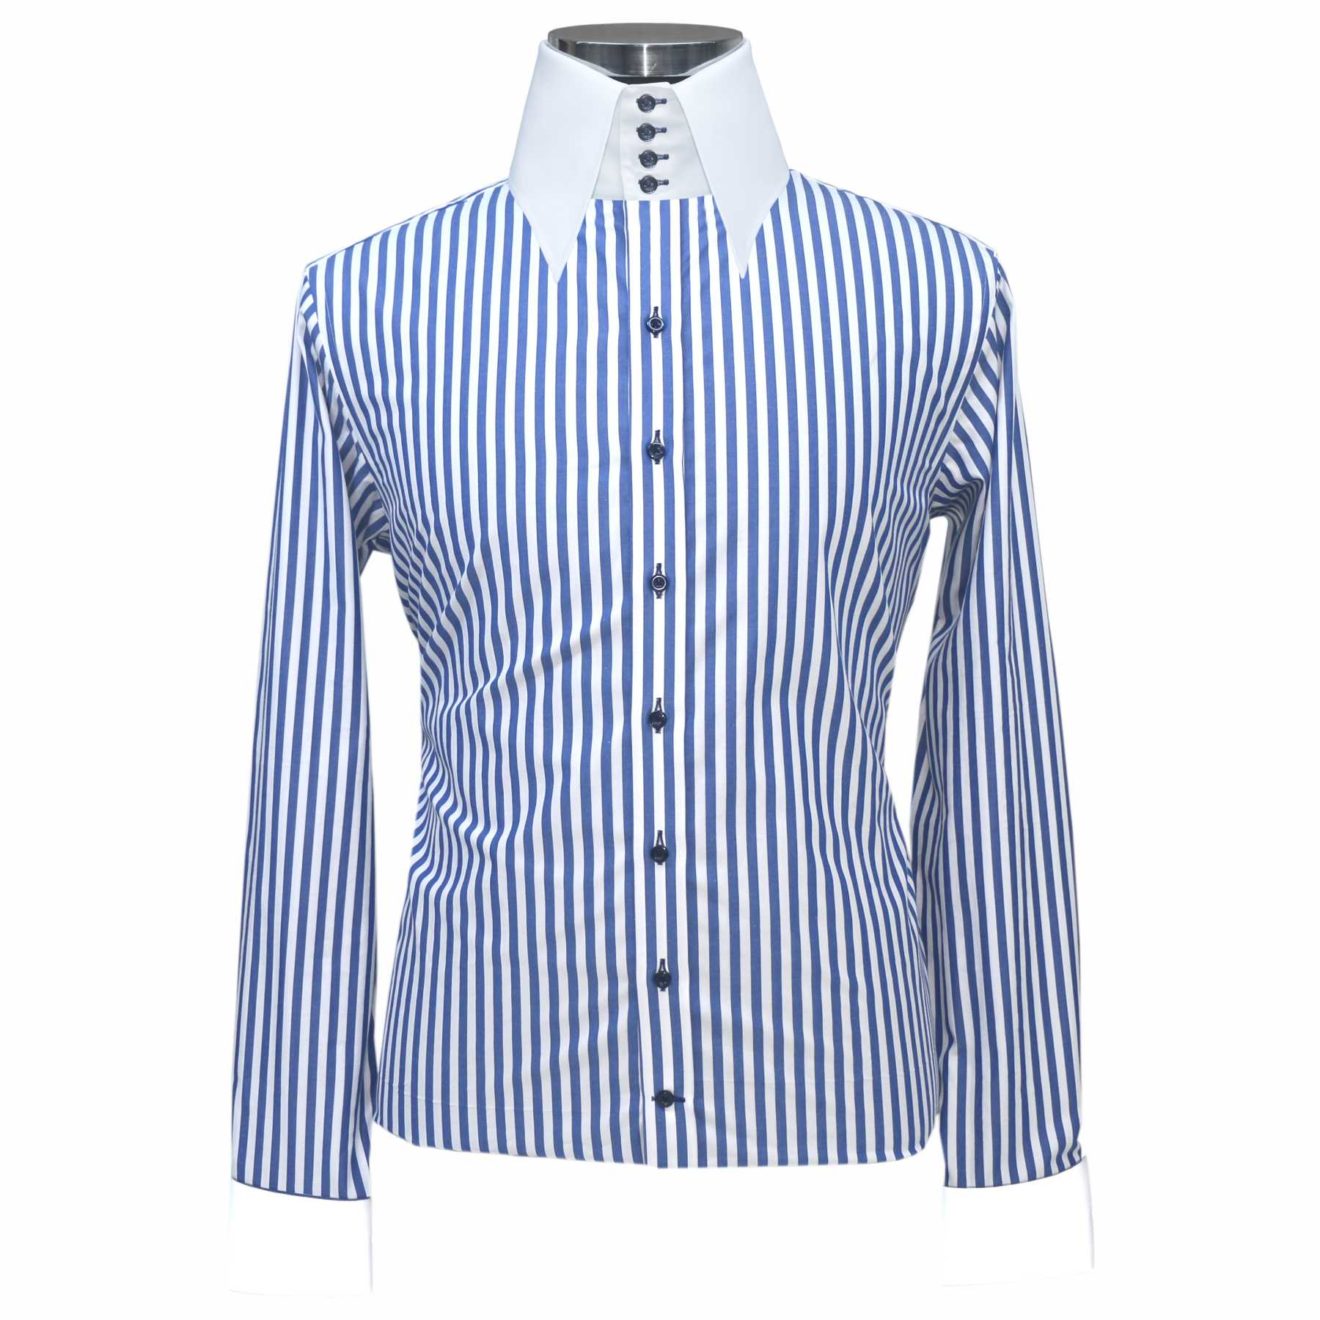 Blue-Stripes-High Spearpoint Collar Shirt - John Clothier London Online